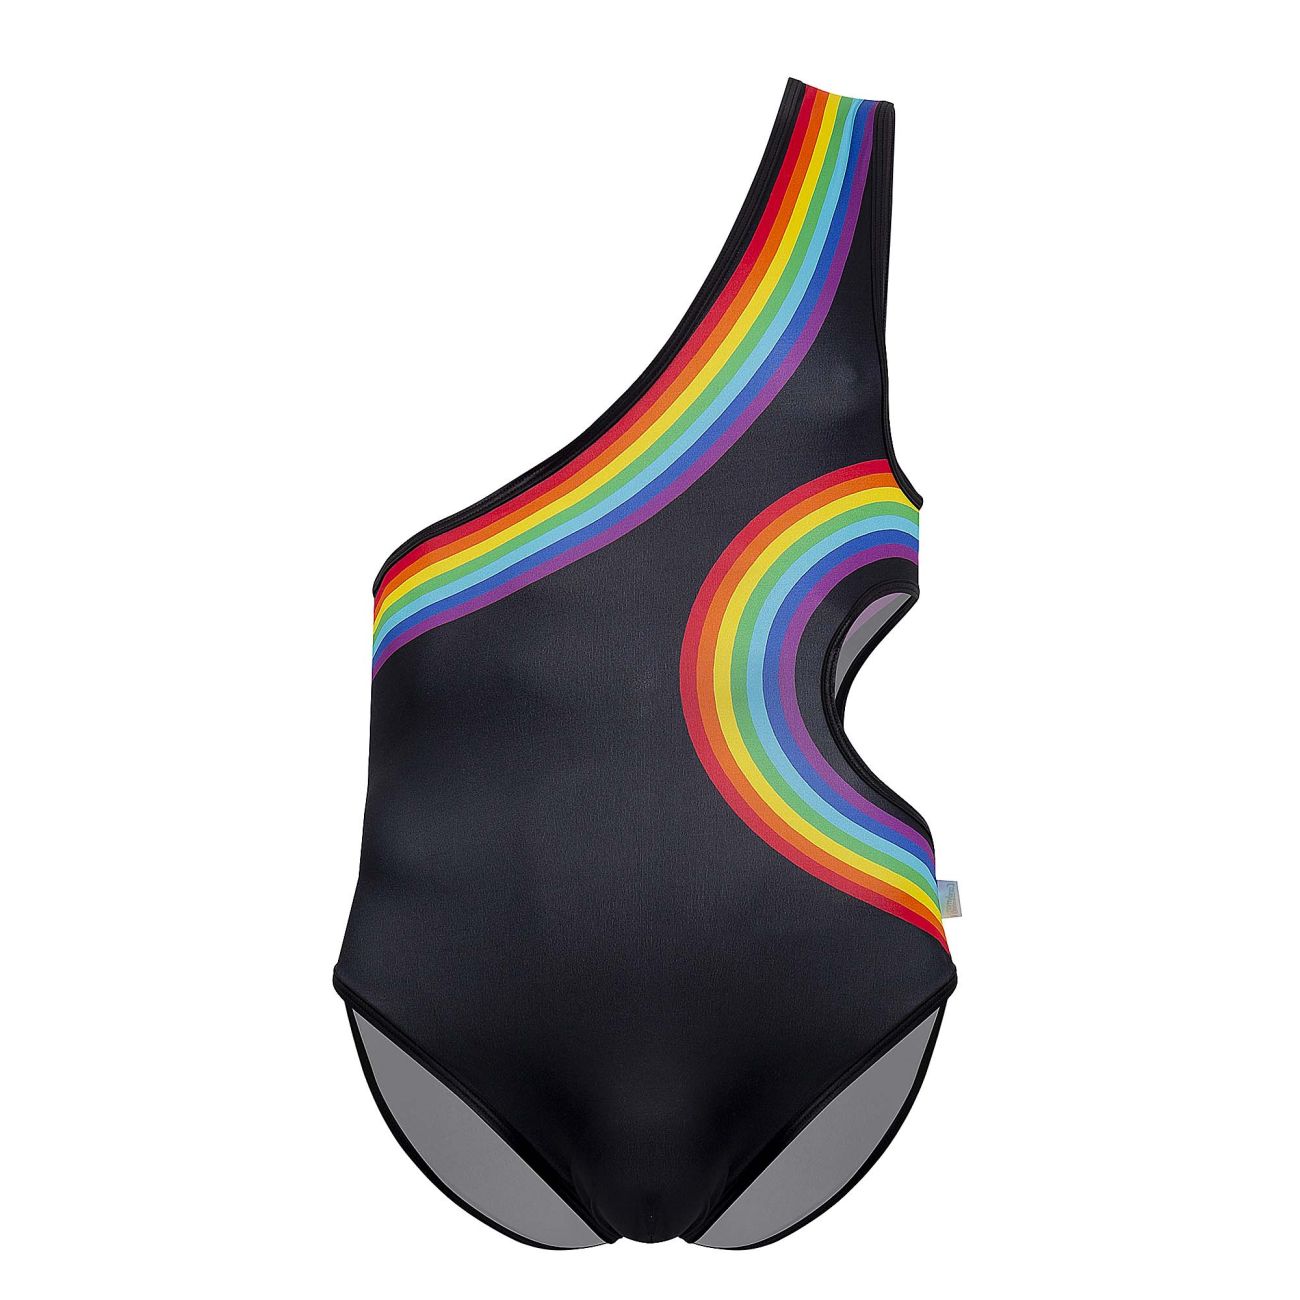 CandyMan 99702 Rainbow Bodysuit